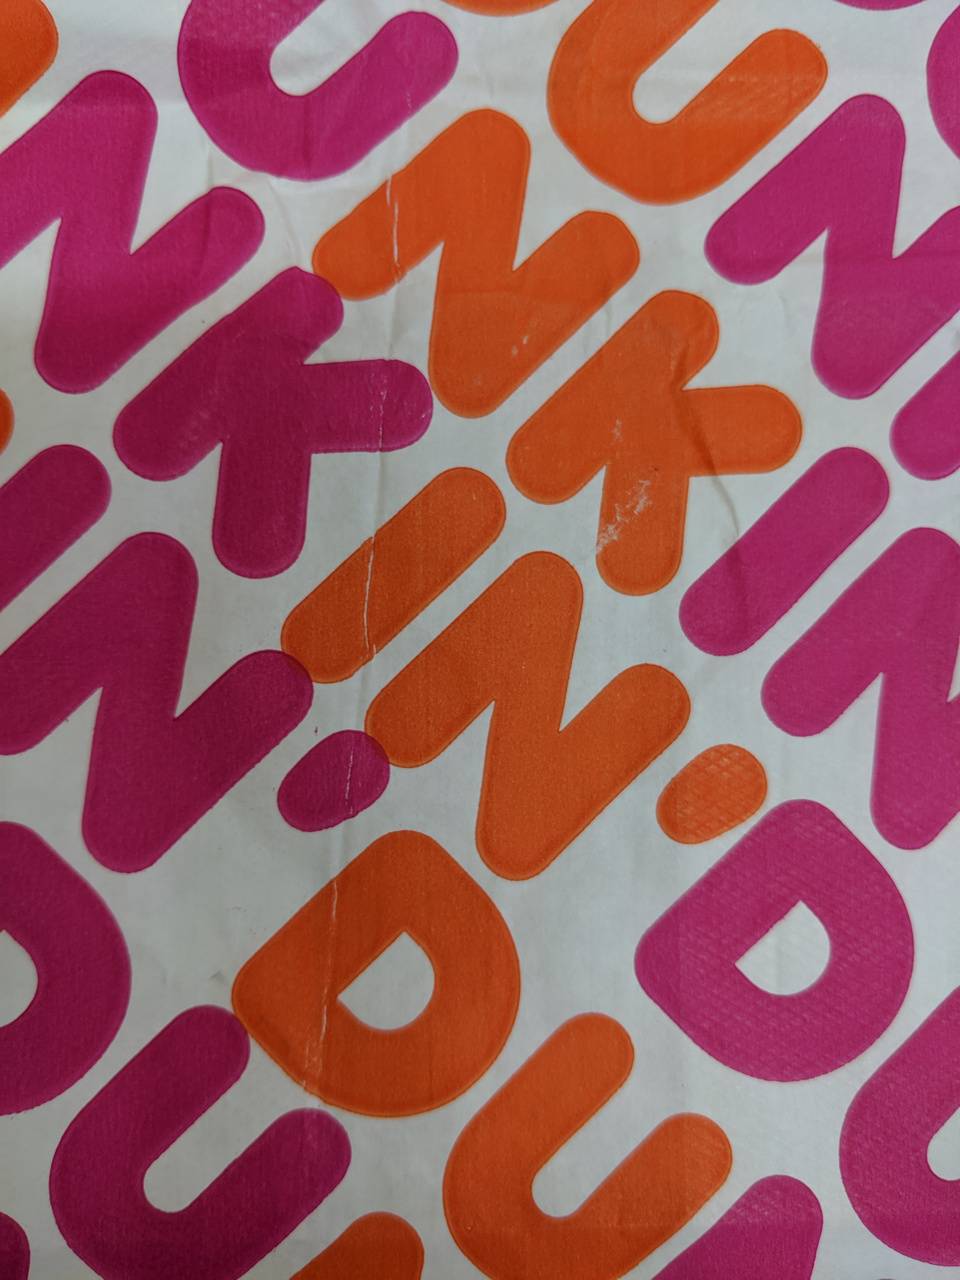 Dunkin donuts wallpaper